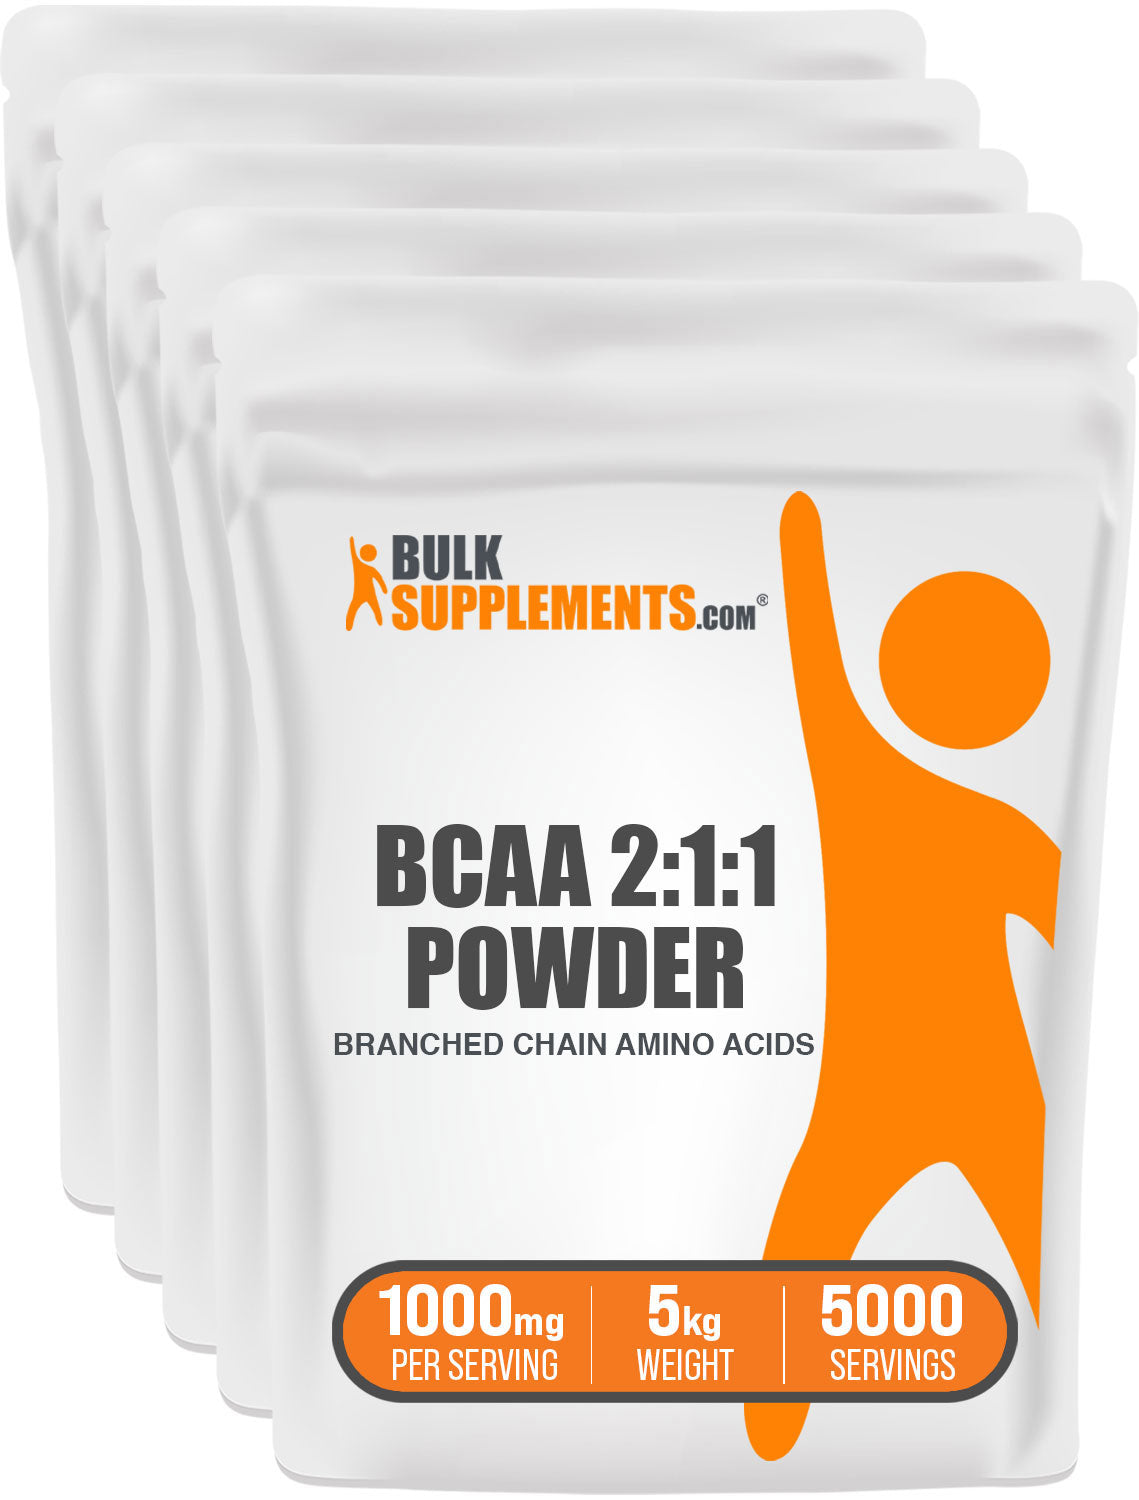 BCAA 2:1:1 Powder 5kg bag